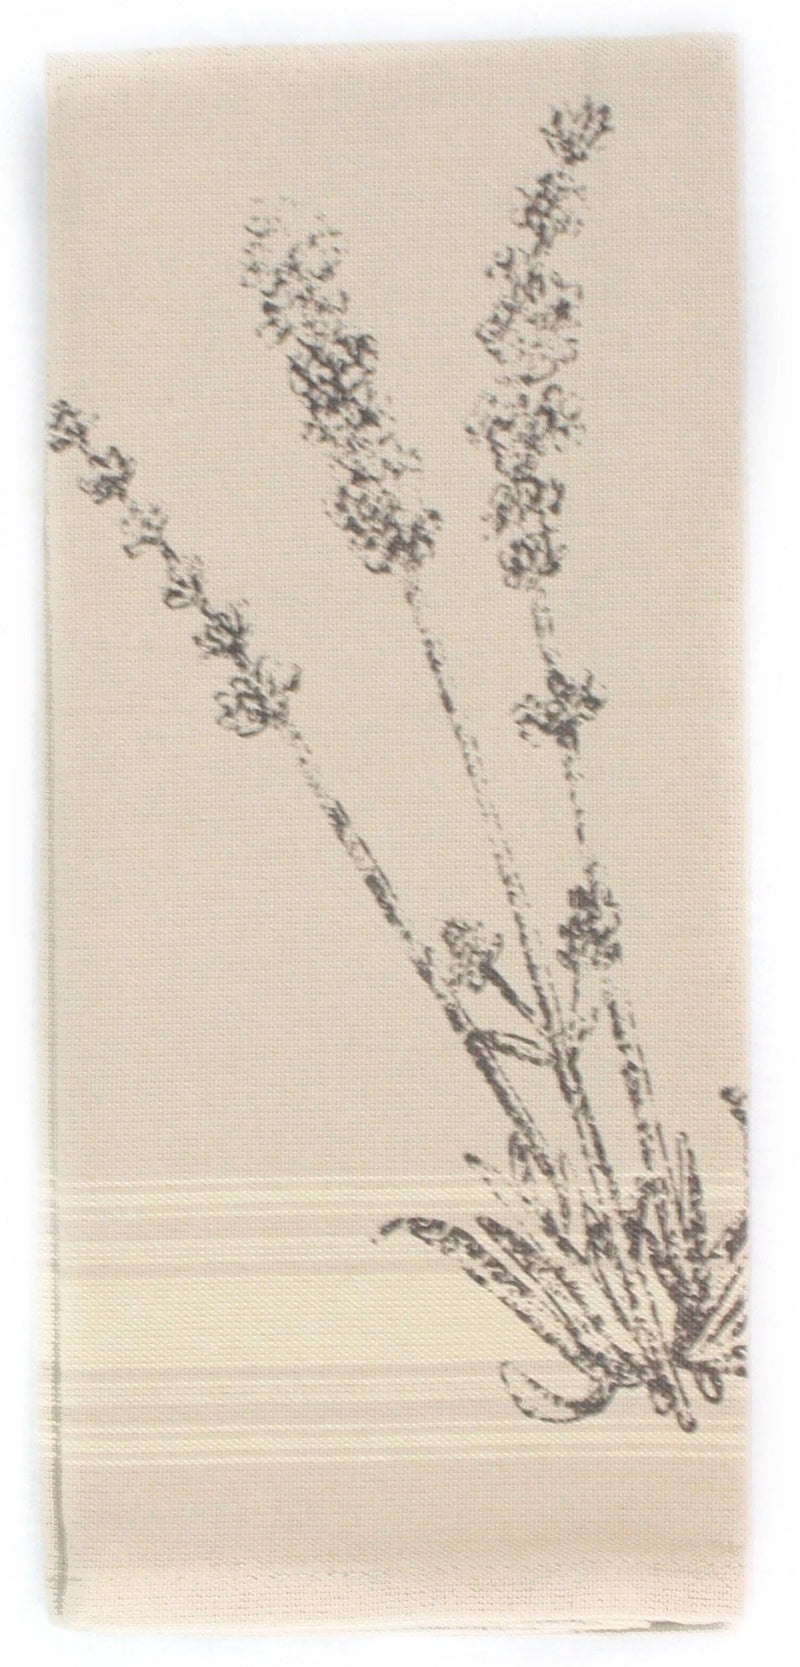 Botanical Printed Dishtowel - Shelburne Country Store